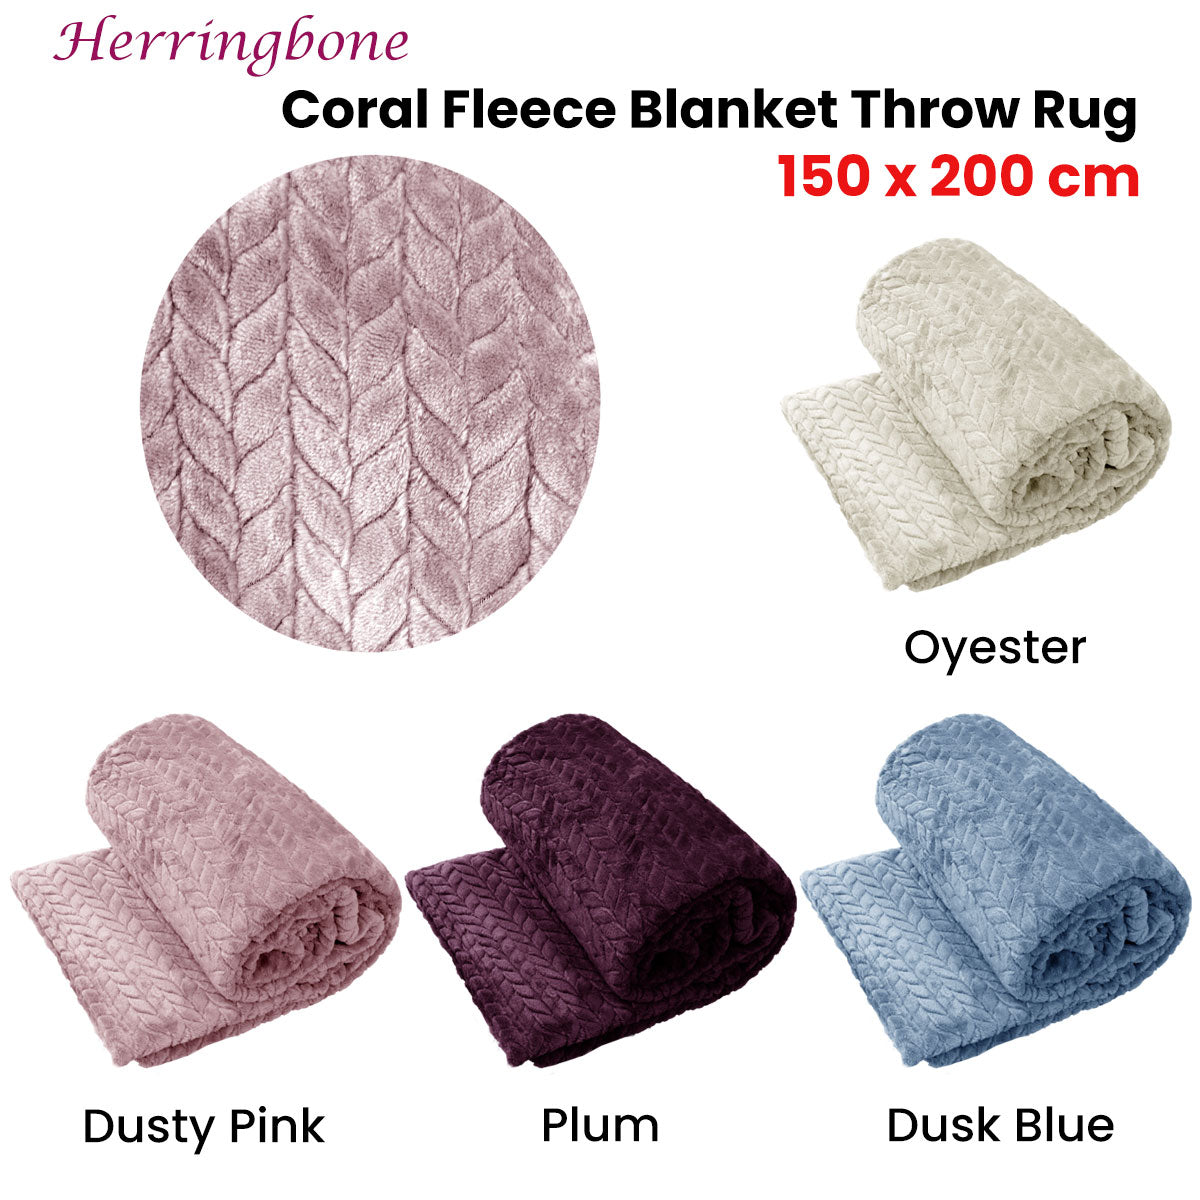 Herringbone Coral Fleece Blanket Throw Rug 150x200 cm Oyester